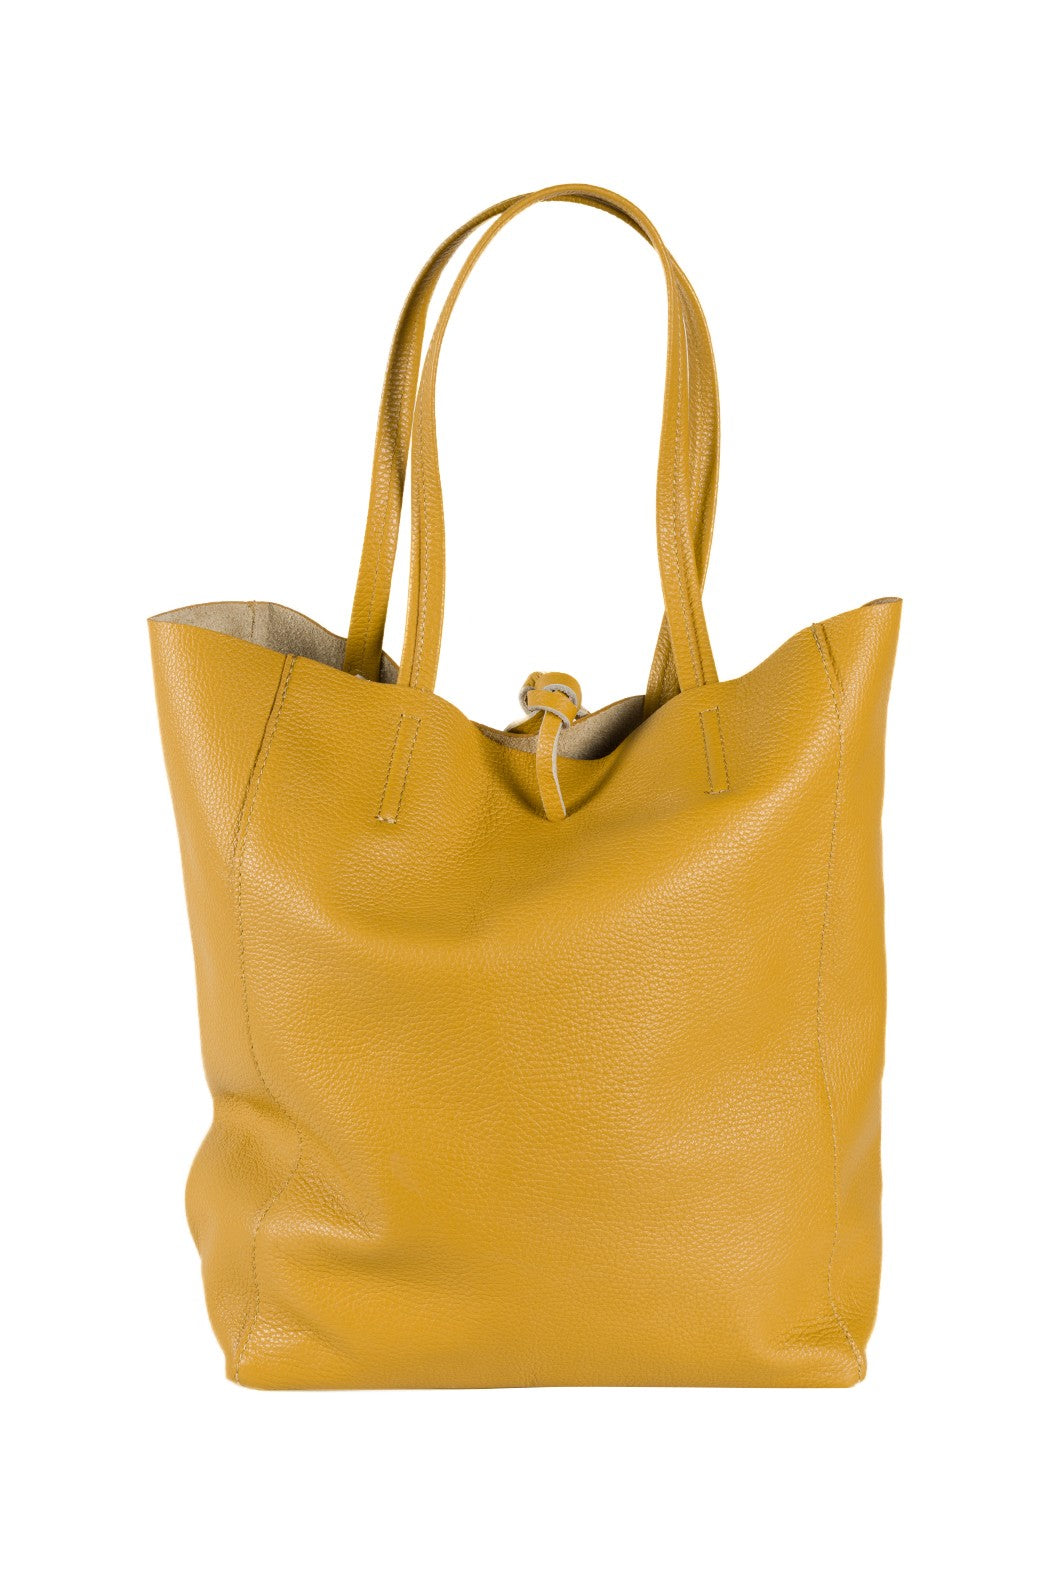 Italian leather shopper tote bag tie top mustard